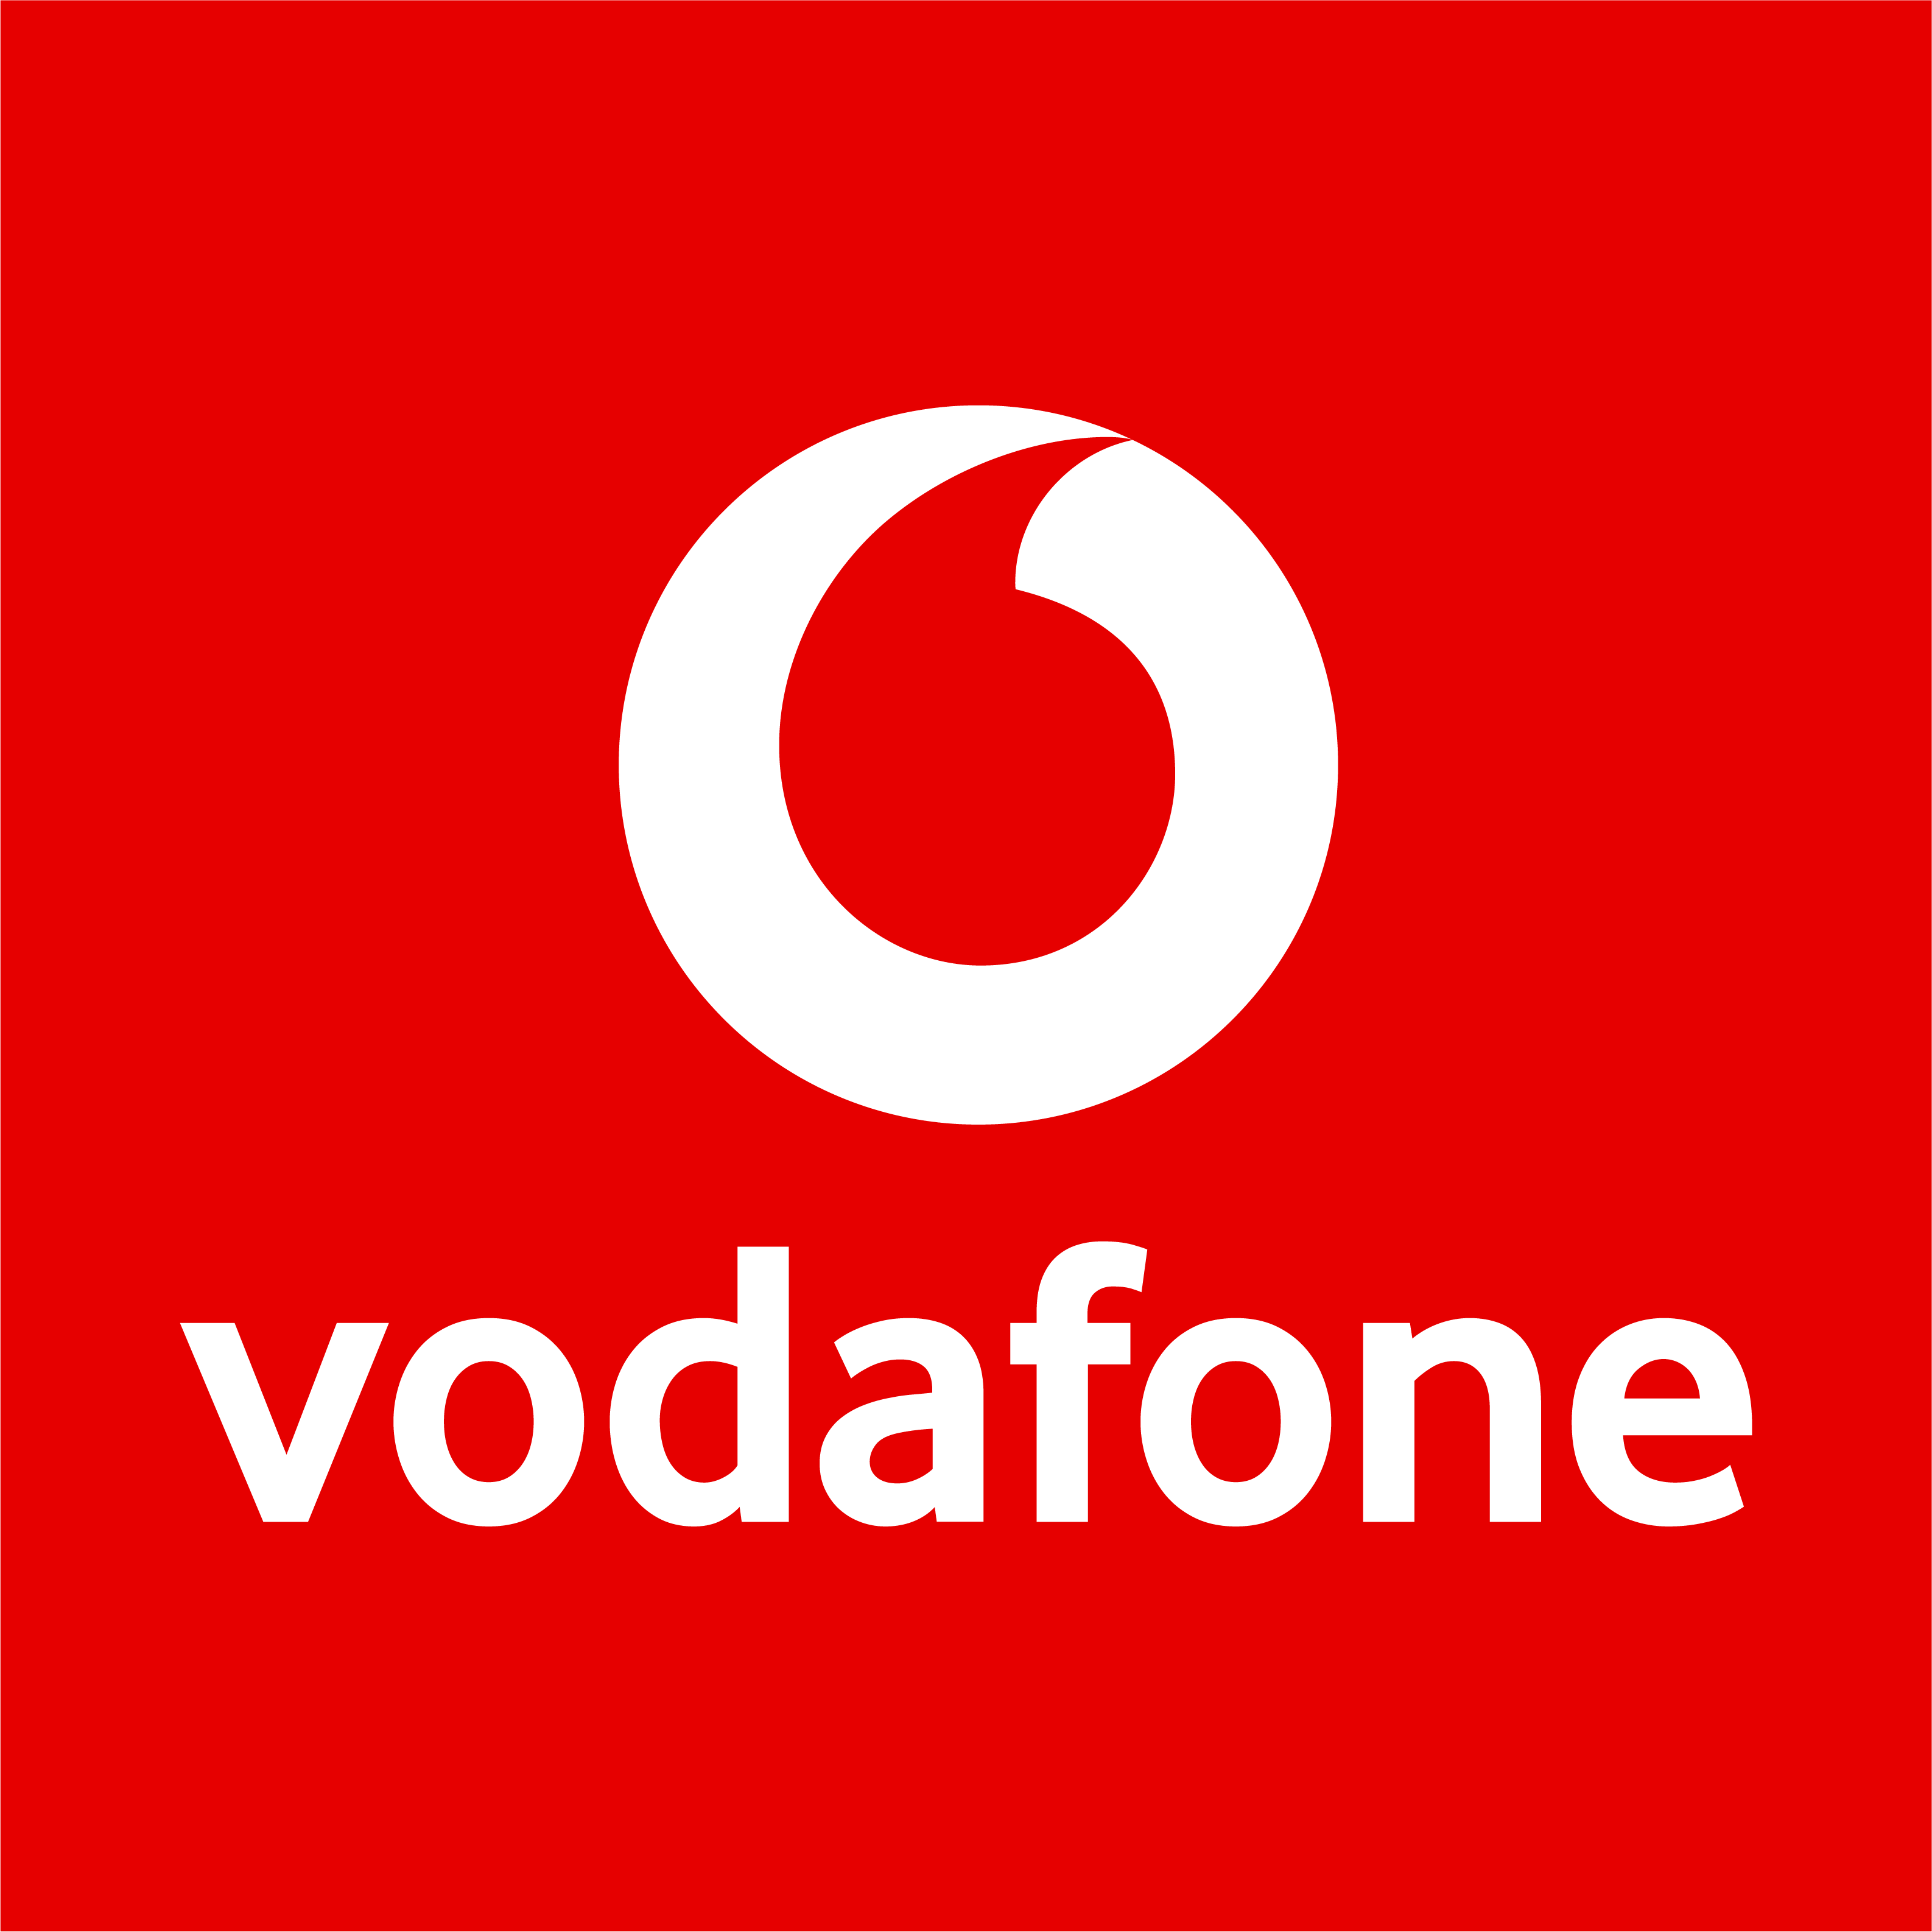 Vodafone Shop in Meerbusch - Logo